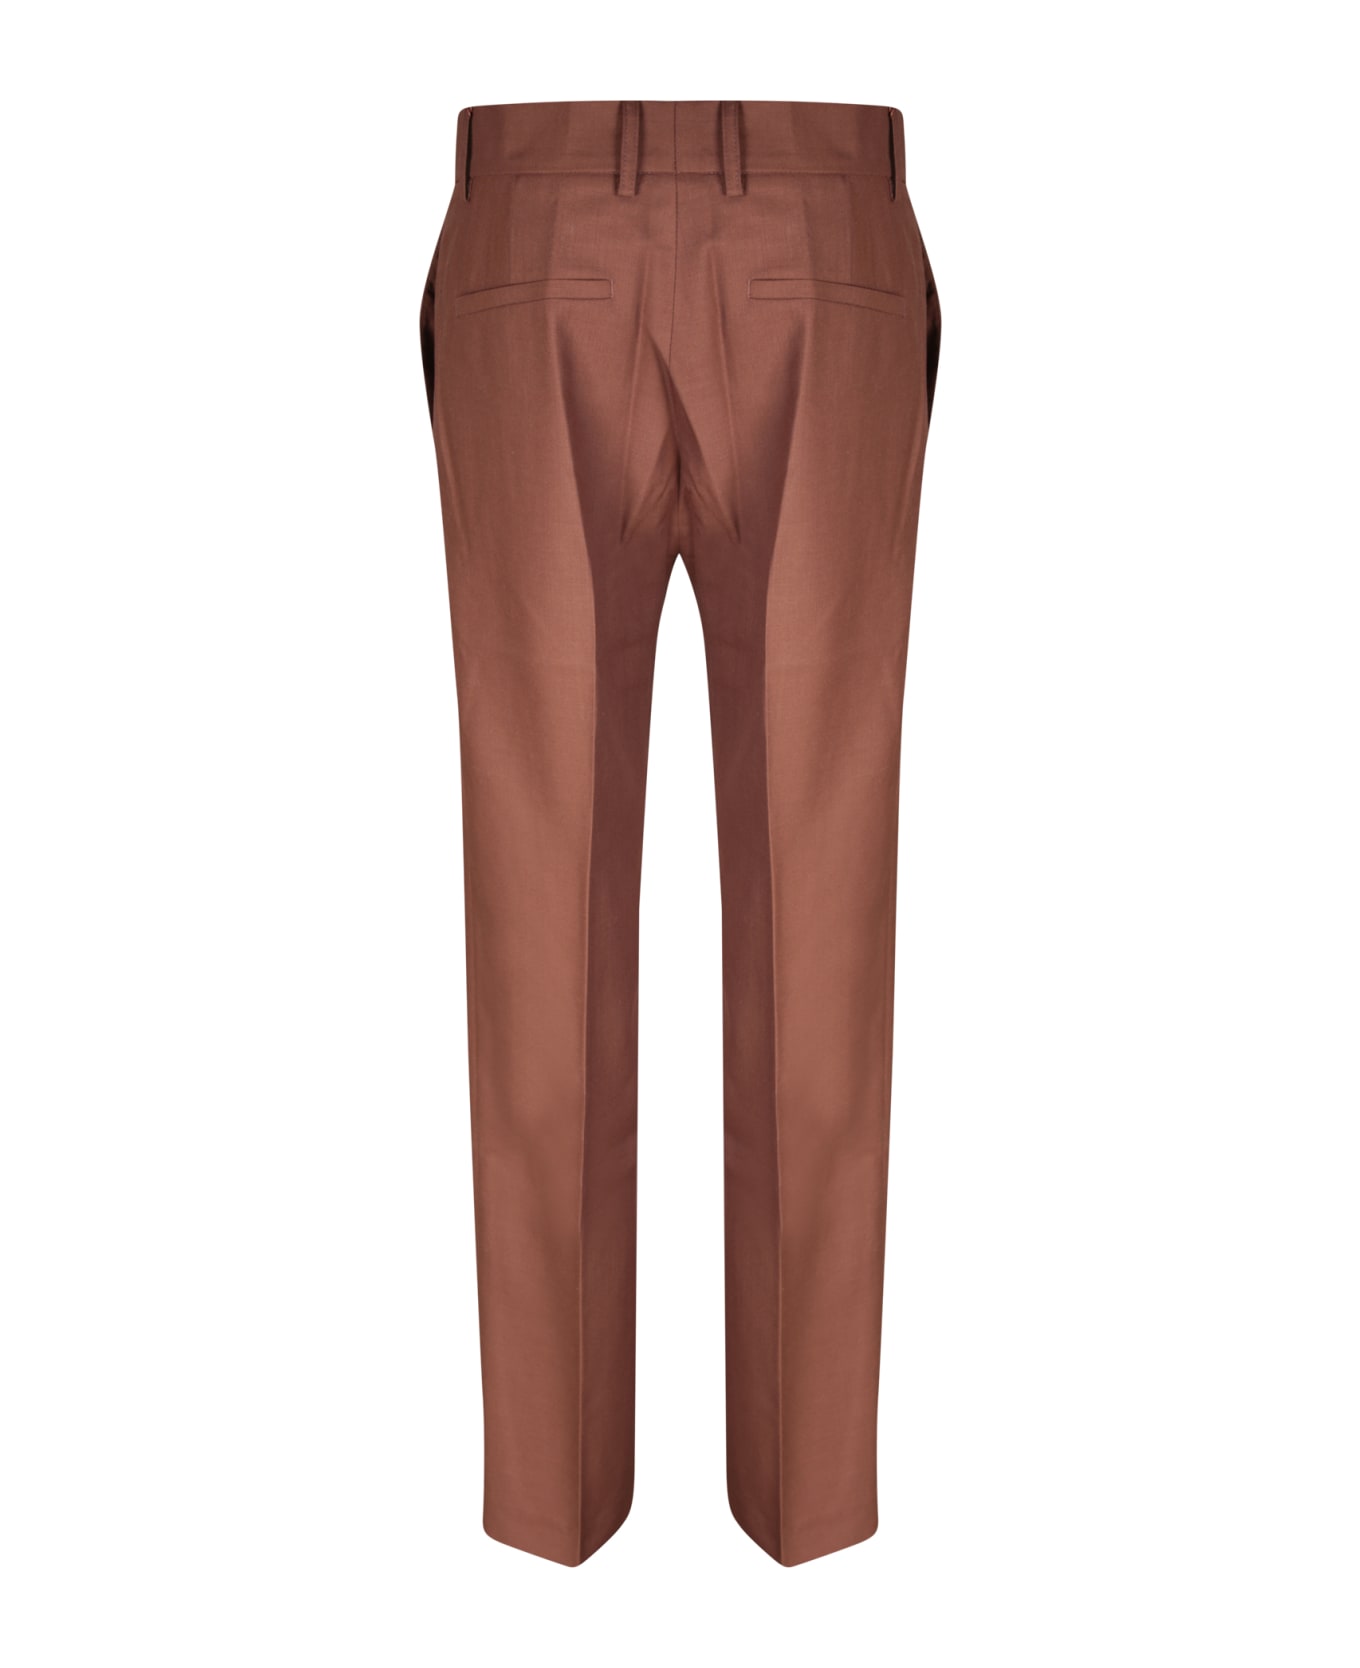 Séfr Sefr Mike Suit Trousers In Brown - Brown